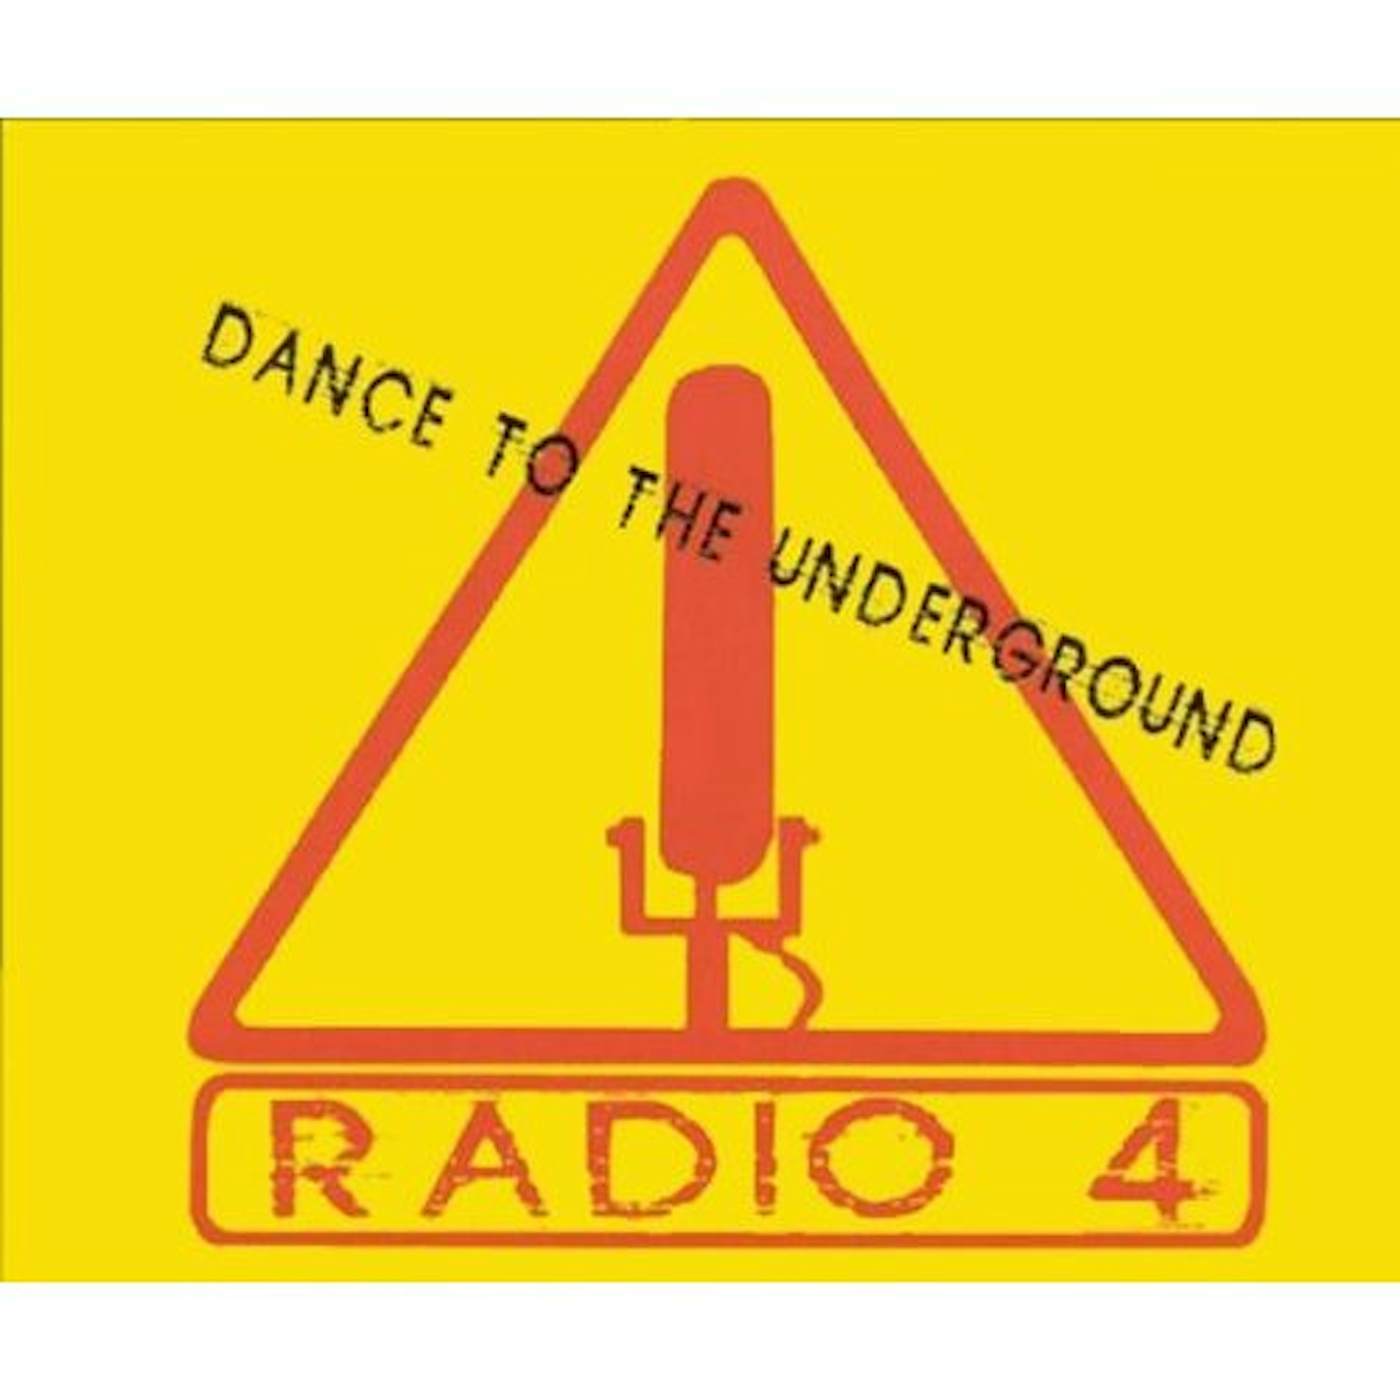 Radio 4 DANCE TO THE UNDERGROUND CD